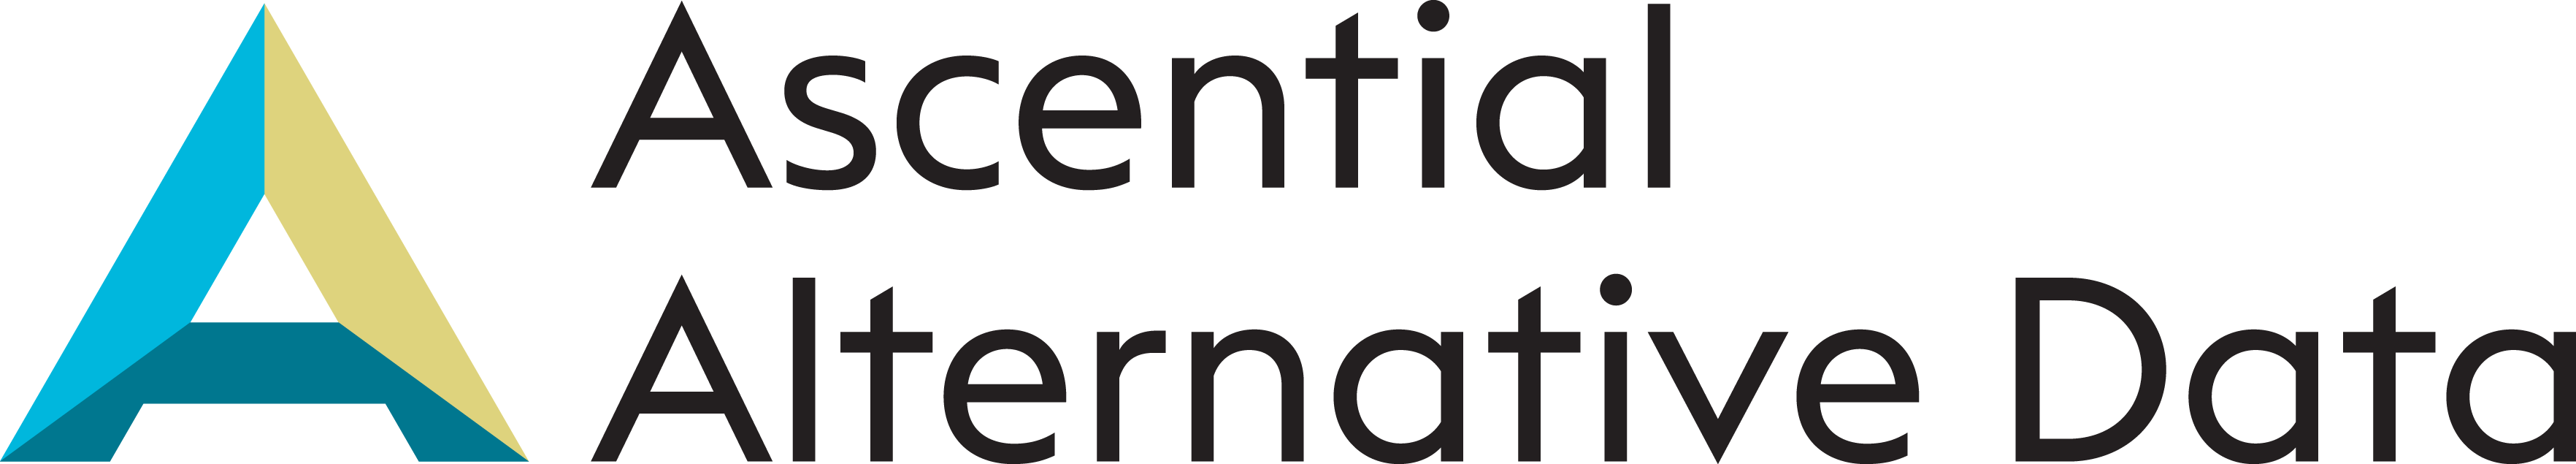 Ascential_Alernative_Data_logo